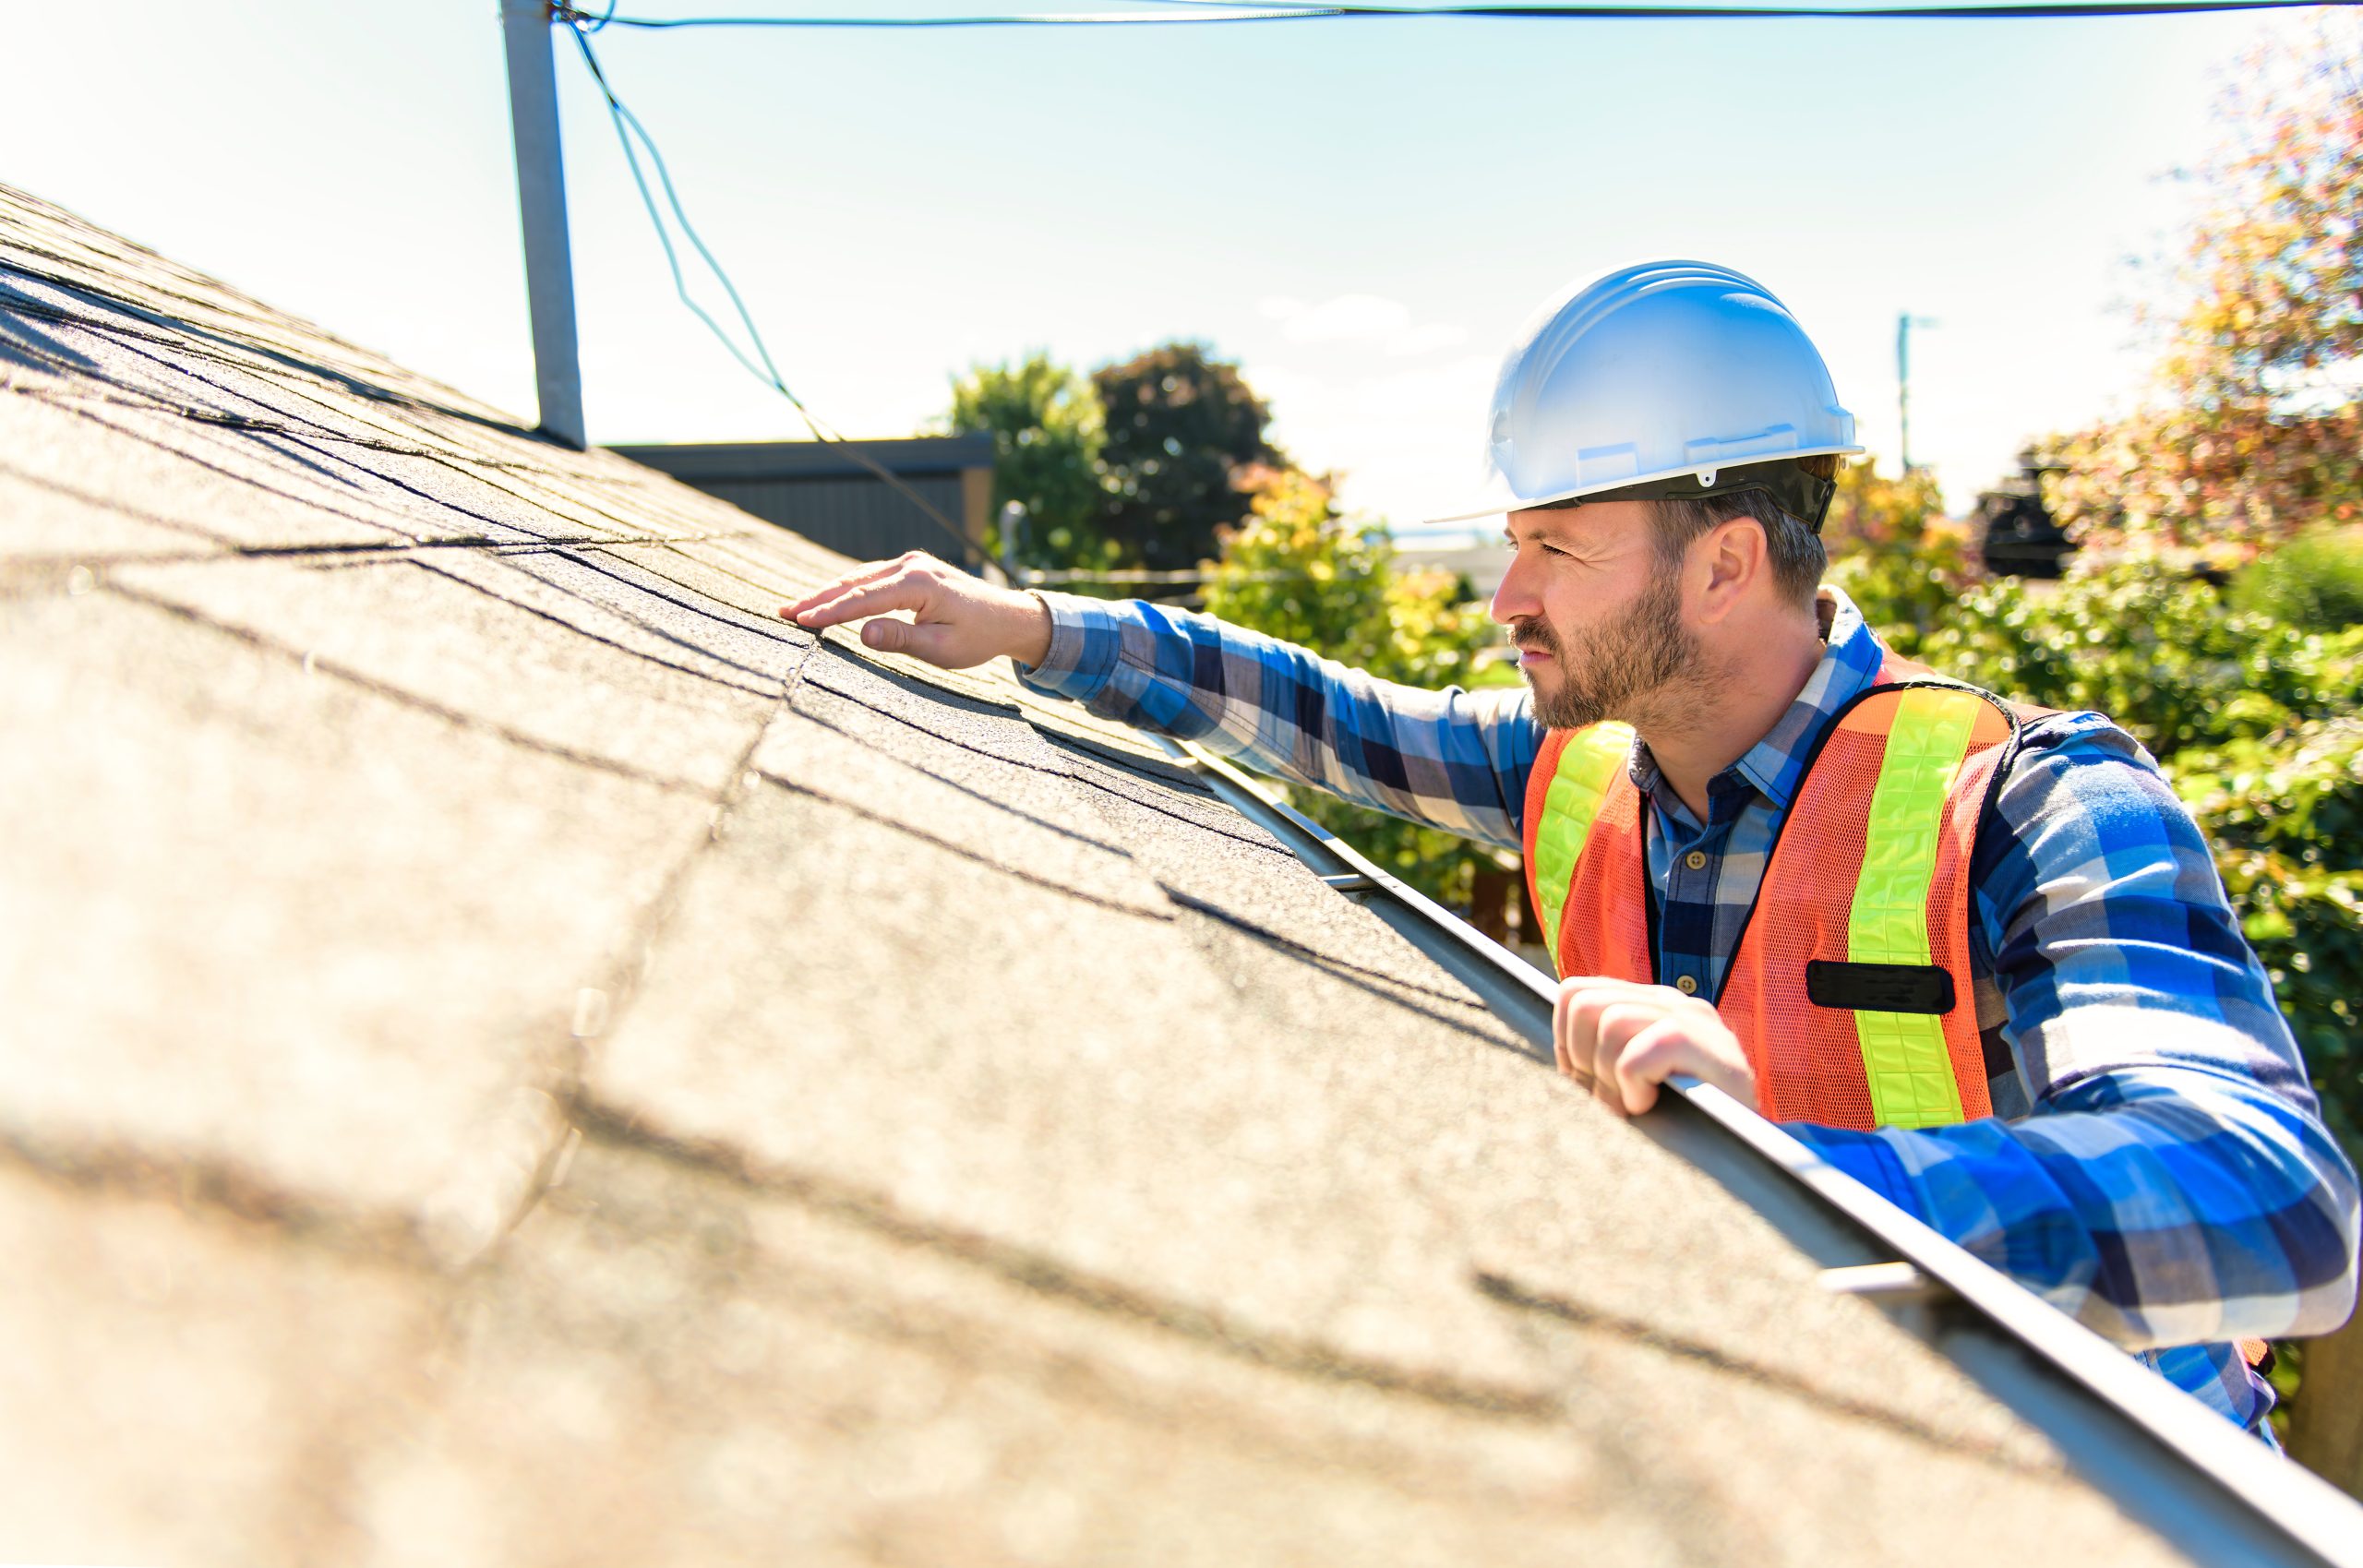 Technician in hard hat inspecting residential asphalt shingle roof